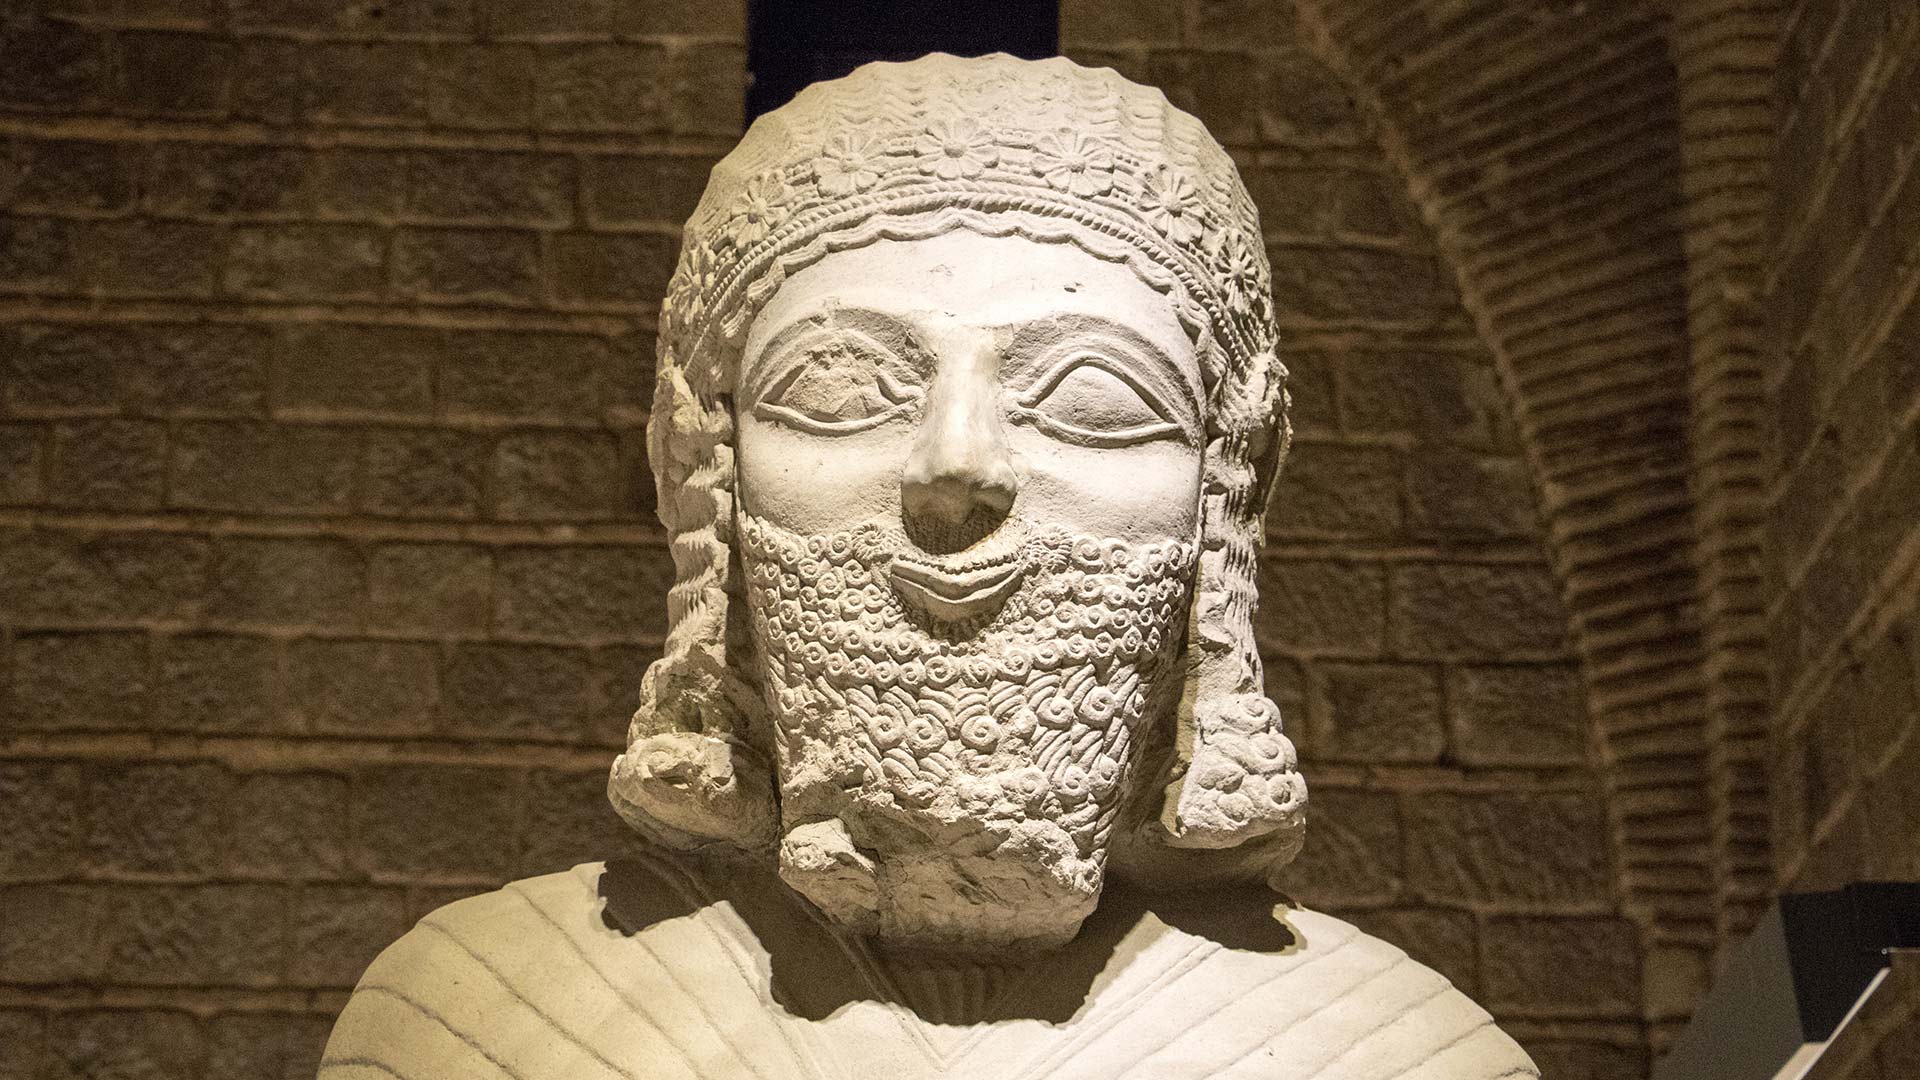 Statue of King Mutallu, subject to Sargon II of Assyria, 1200 - 700 BCE, Aslantepe in Malatya, Museum of Anatolian Civilization, Ankara, Turkey